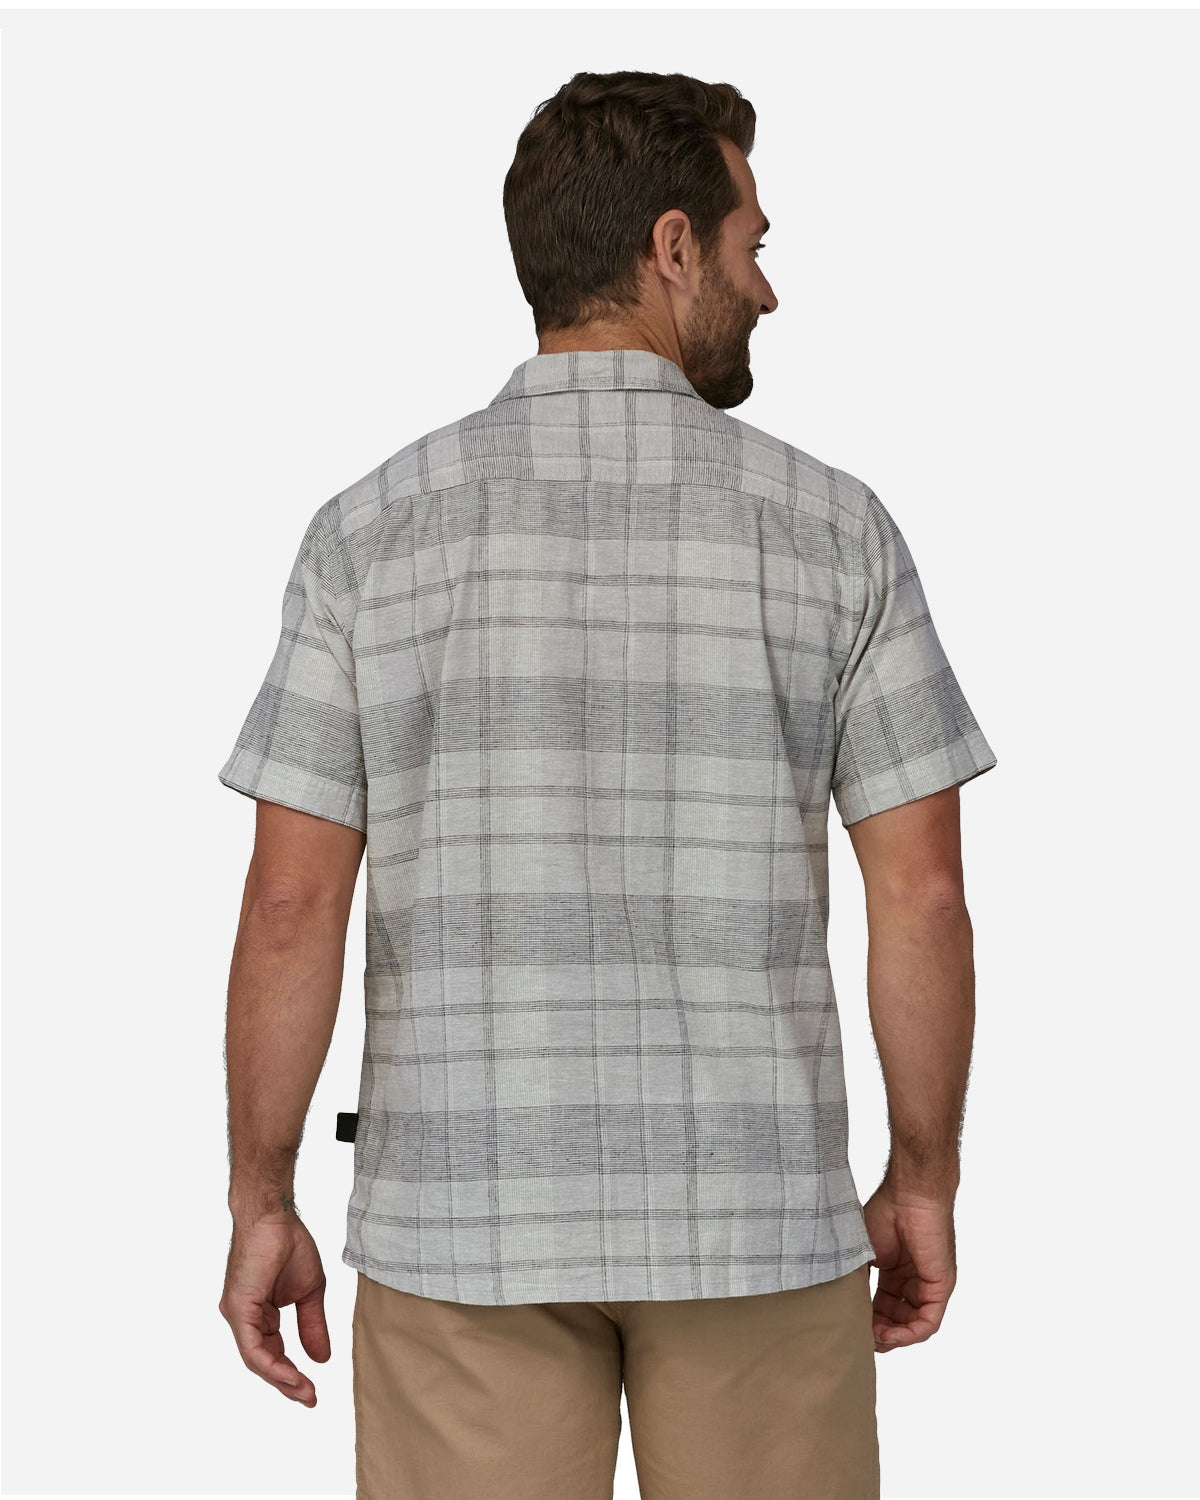 M's Back Step Shirt - Shore Plaid/Salt Grey - Patagonia - Munkstore.dk